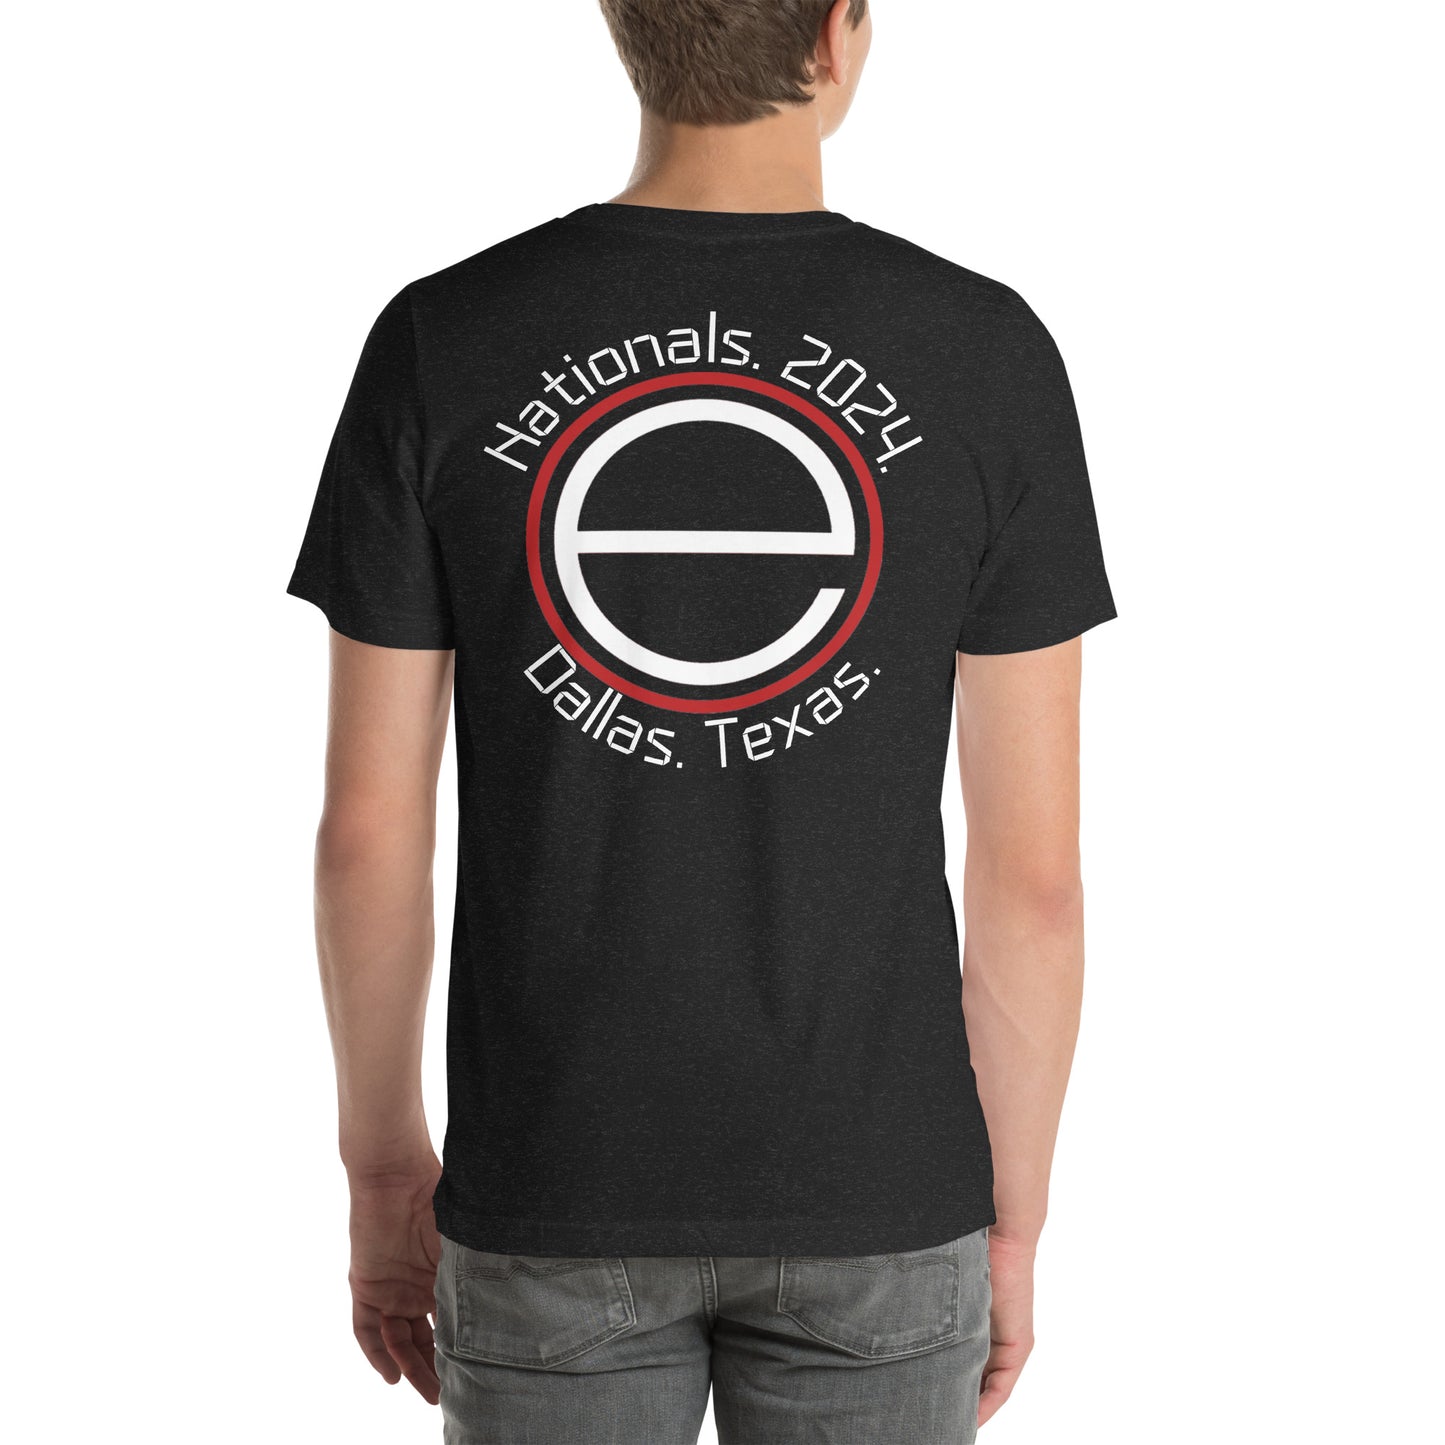 BoysNationals-Unisex t-shirt